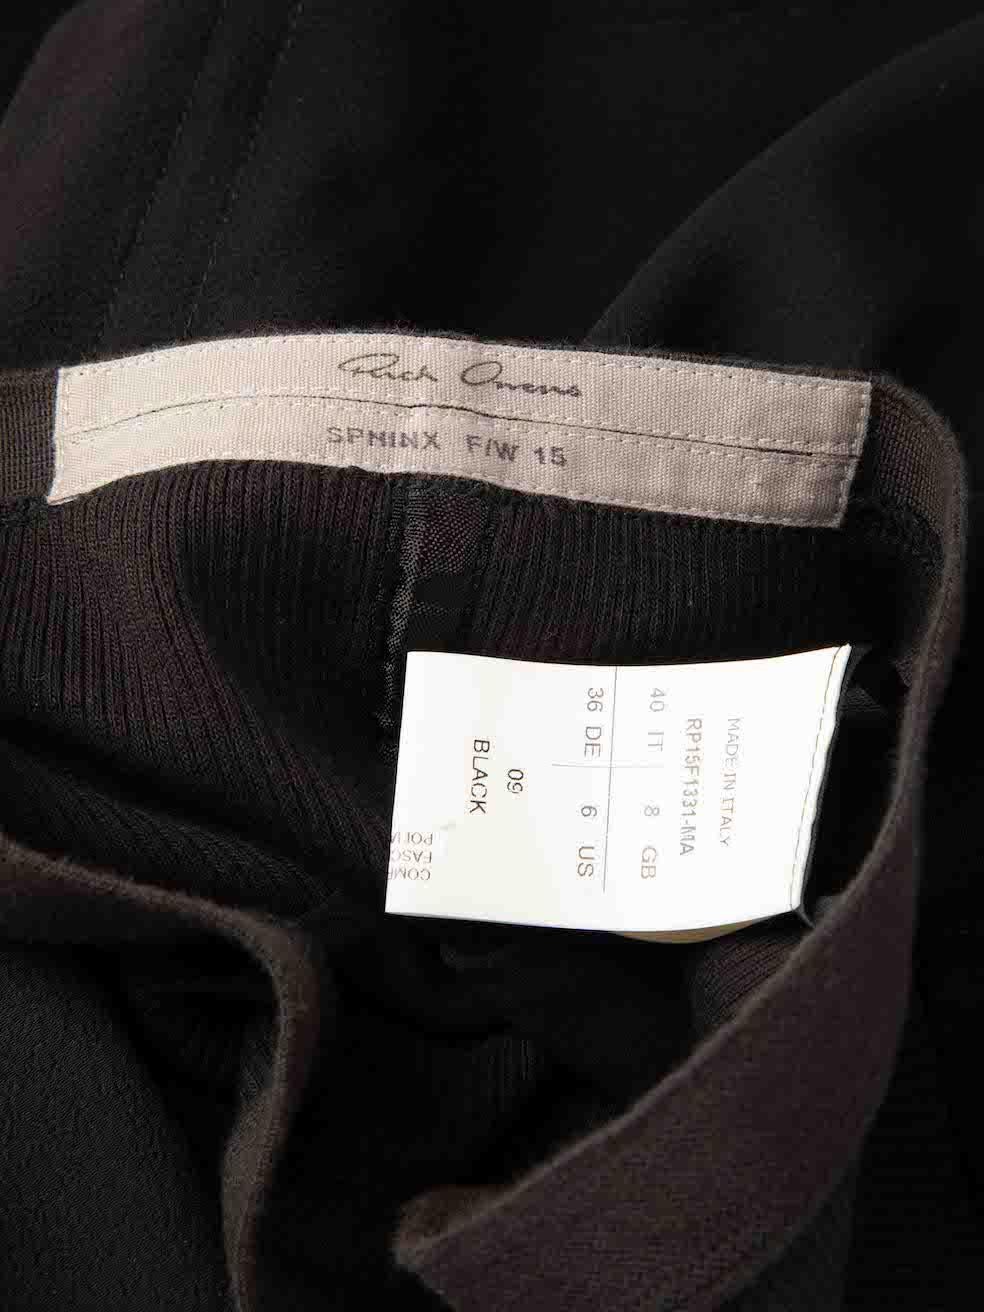 Rick Owens AW 15 Black Asymmetric Drape Midi Skirt Size S 1